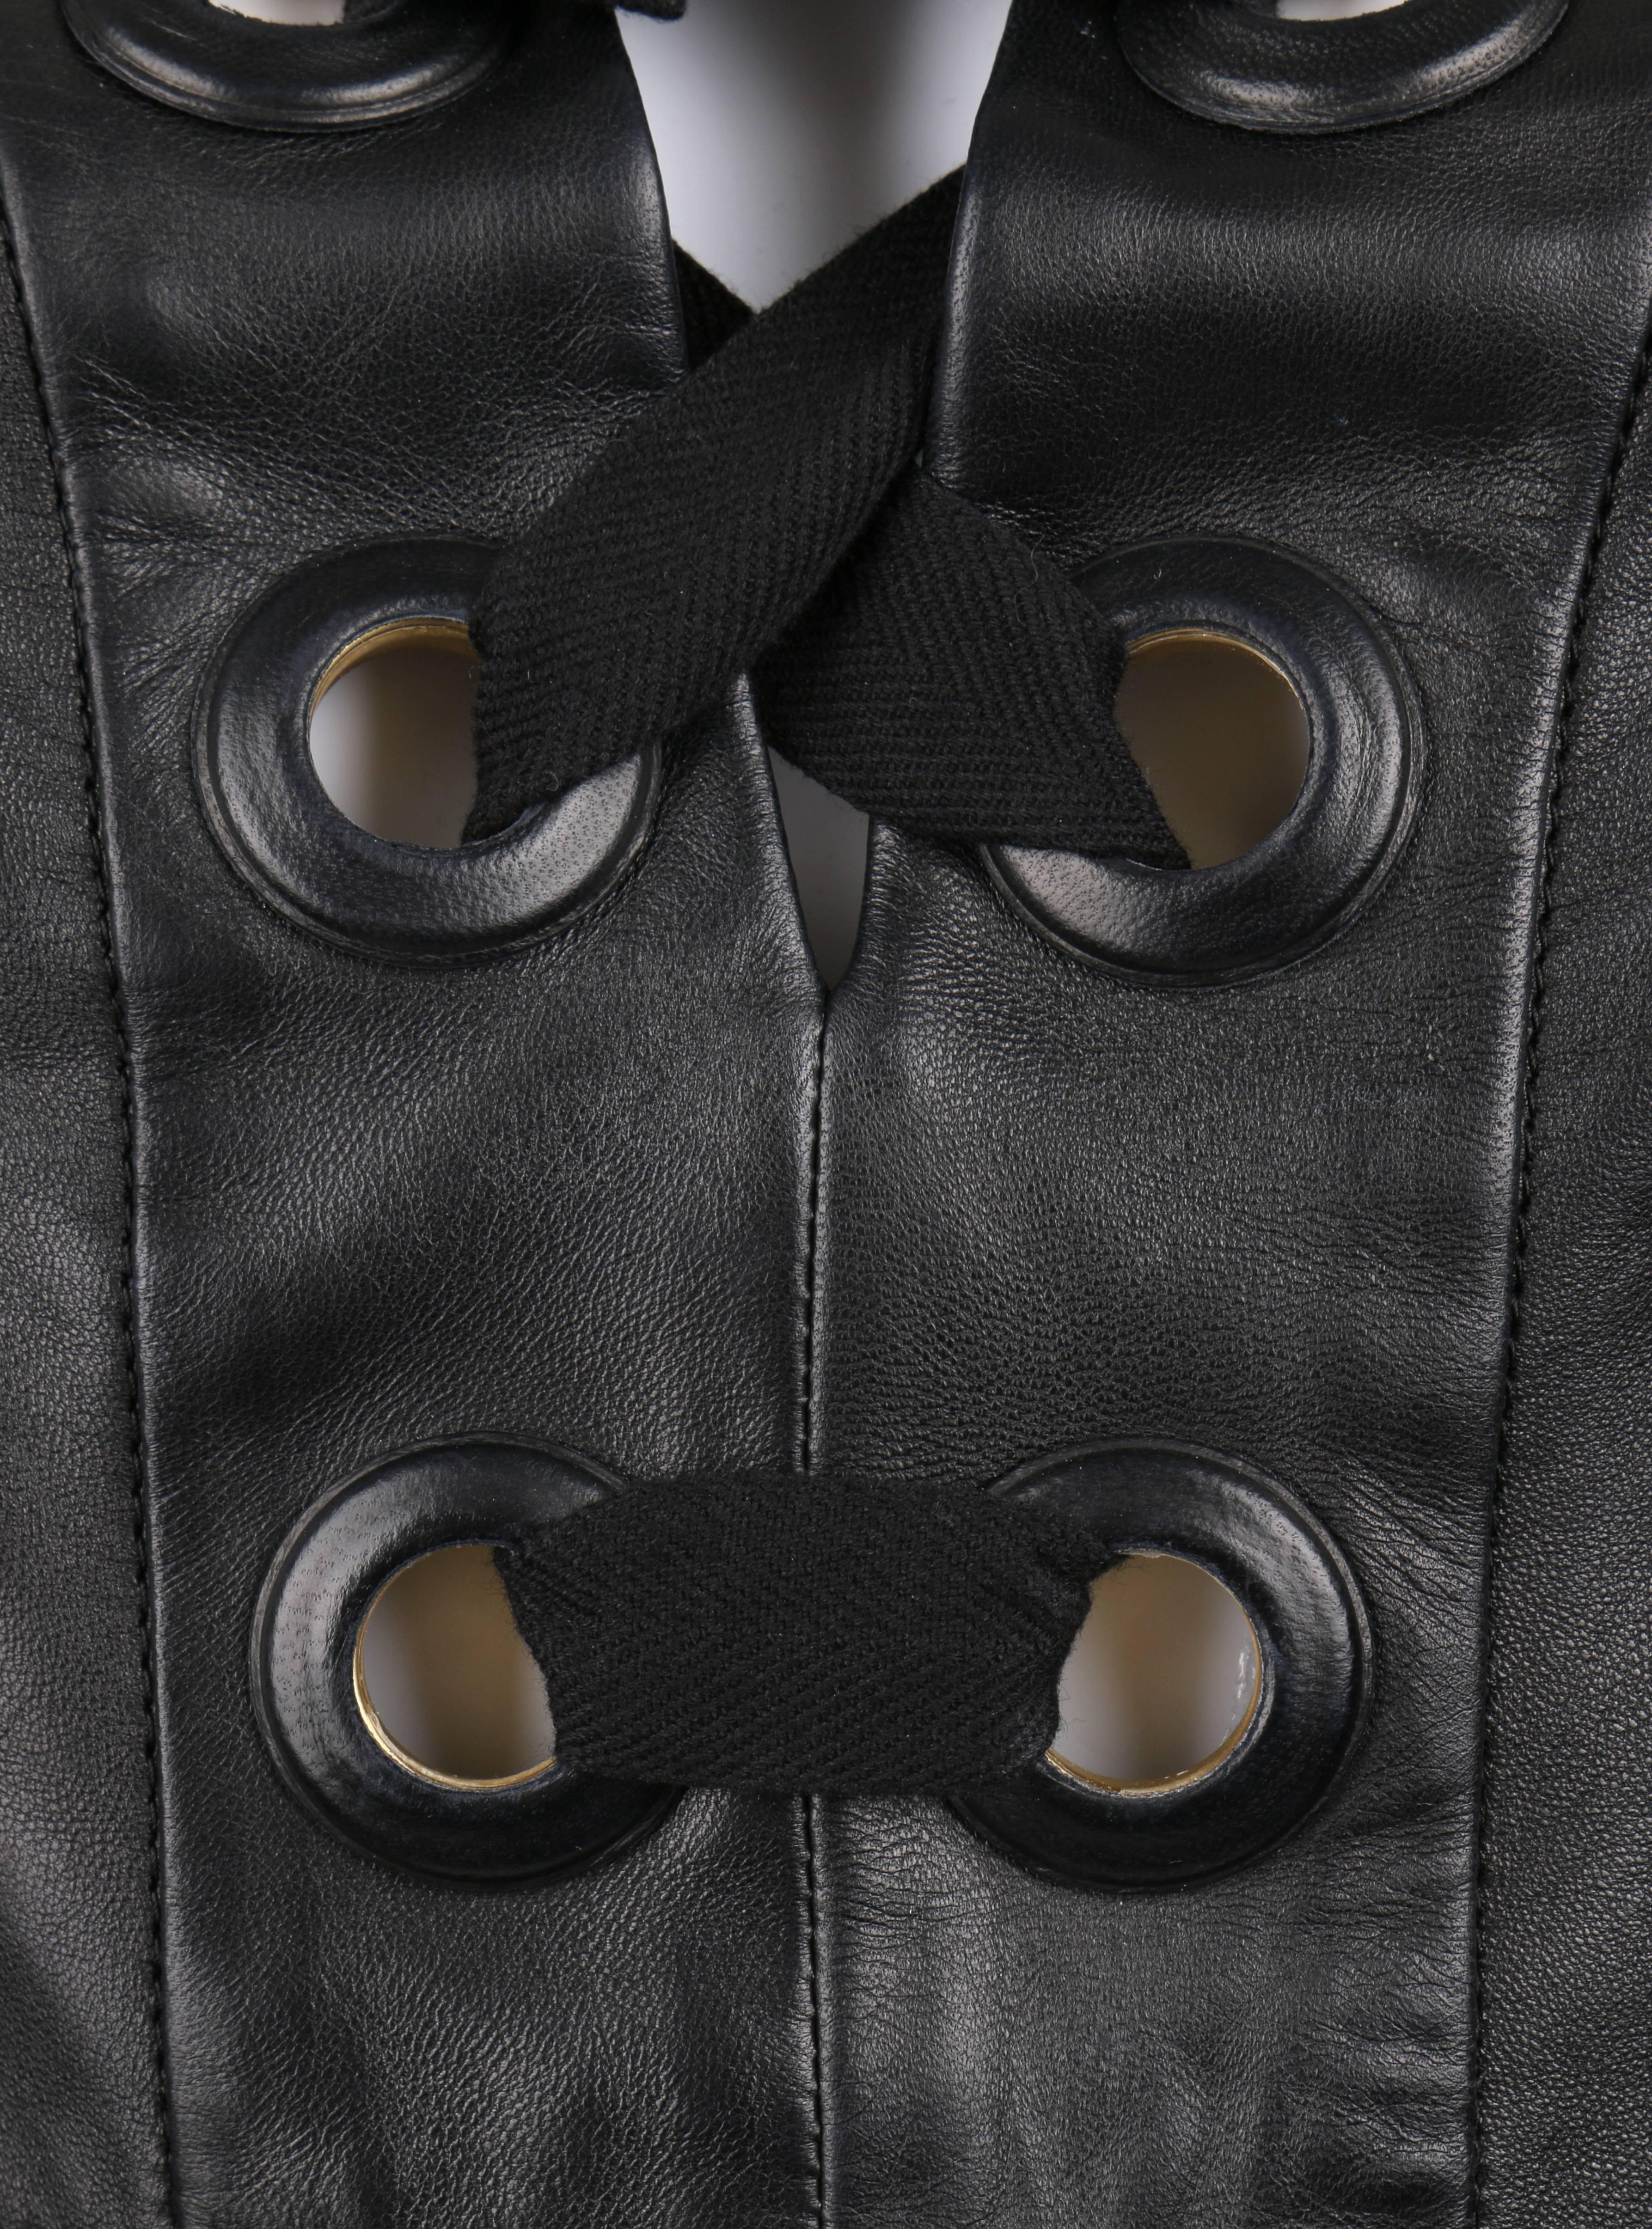 GUCCI S/S 2015 Black Napa Leather Lattice Lace Up Grommeted Sheath Dress 4